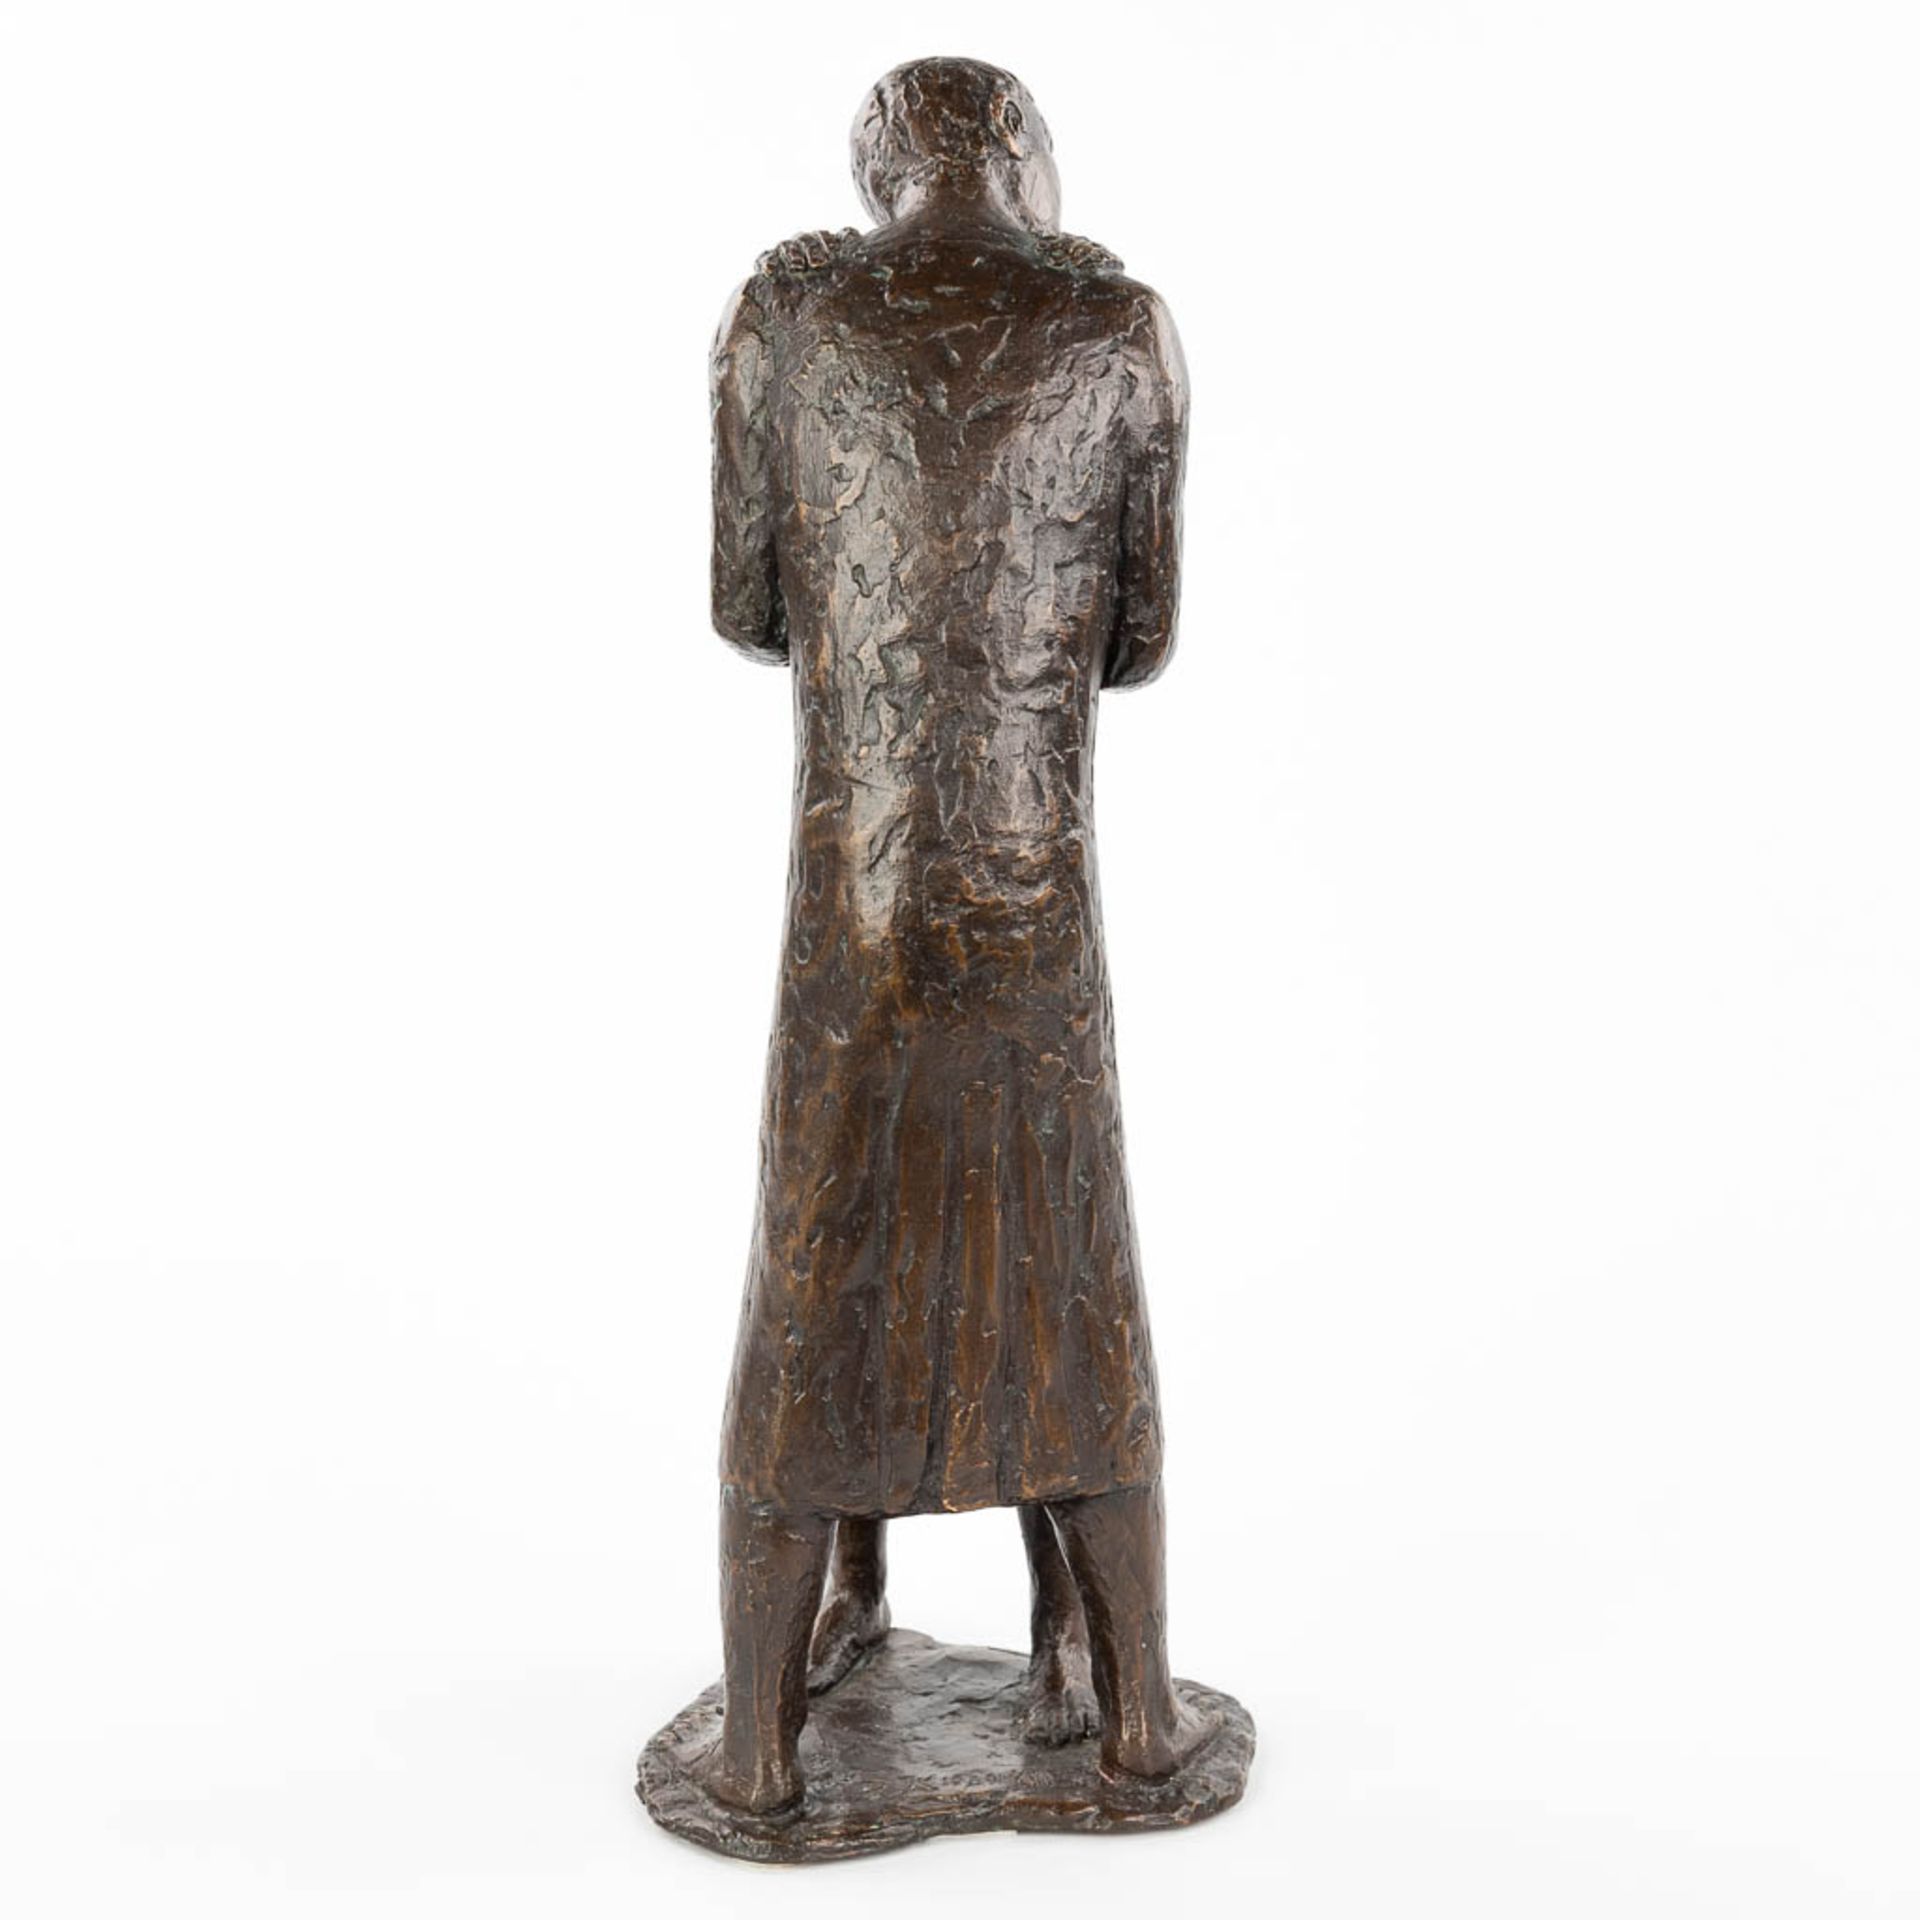 Richard KESSLER (1916) 'Der Abschied' ' Goodbye', patinated bronze. (H:41cm) - Image 2 of 11